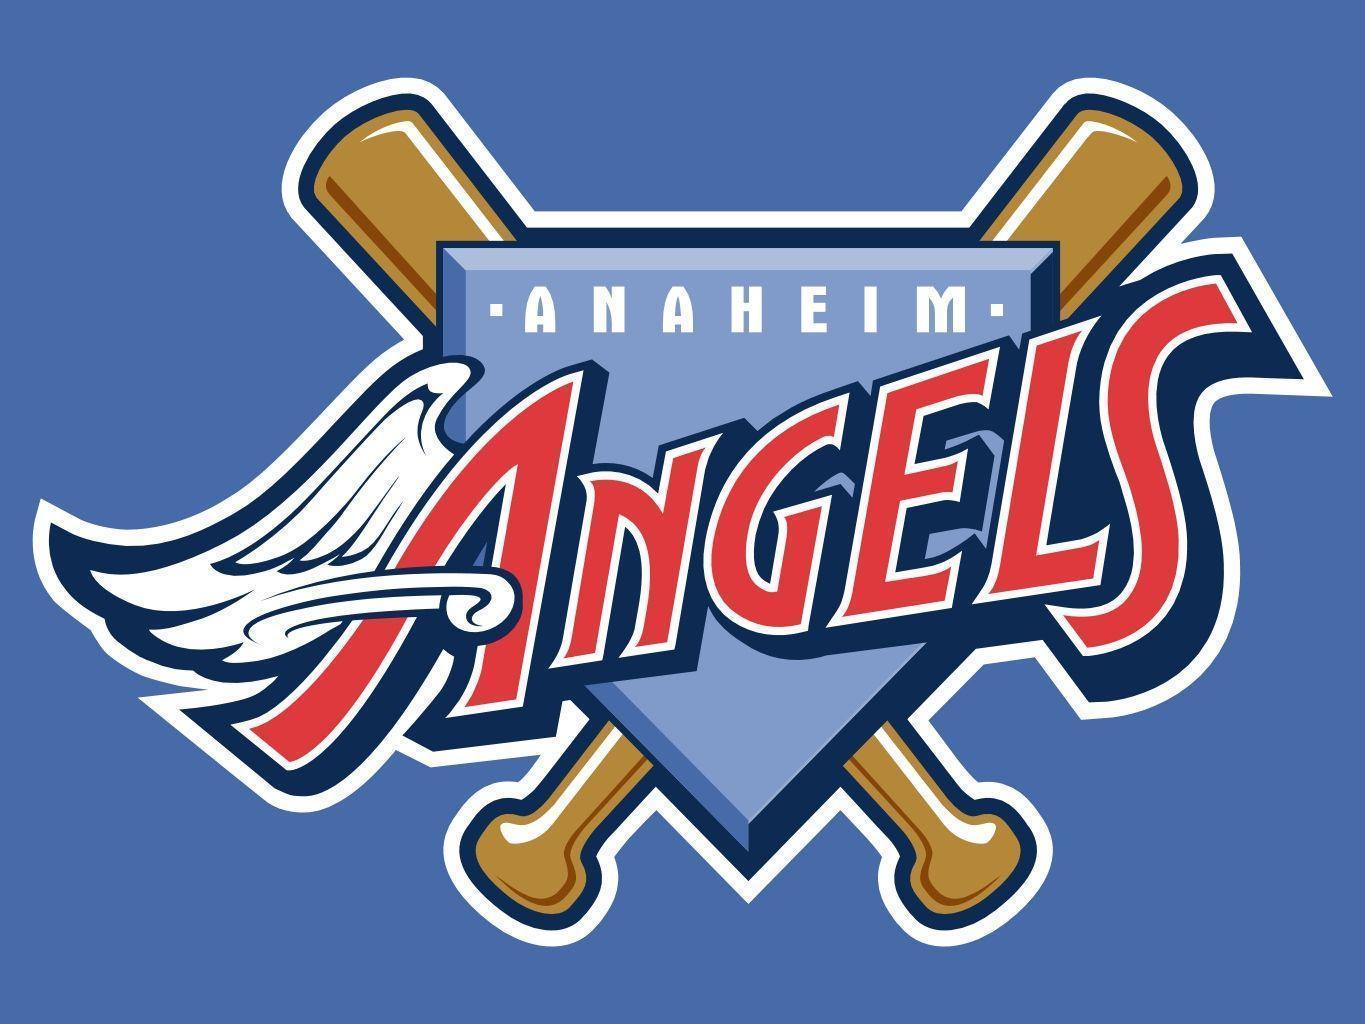 Angels Baseball Wallpaper